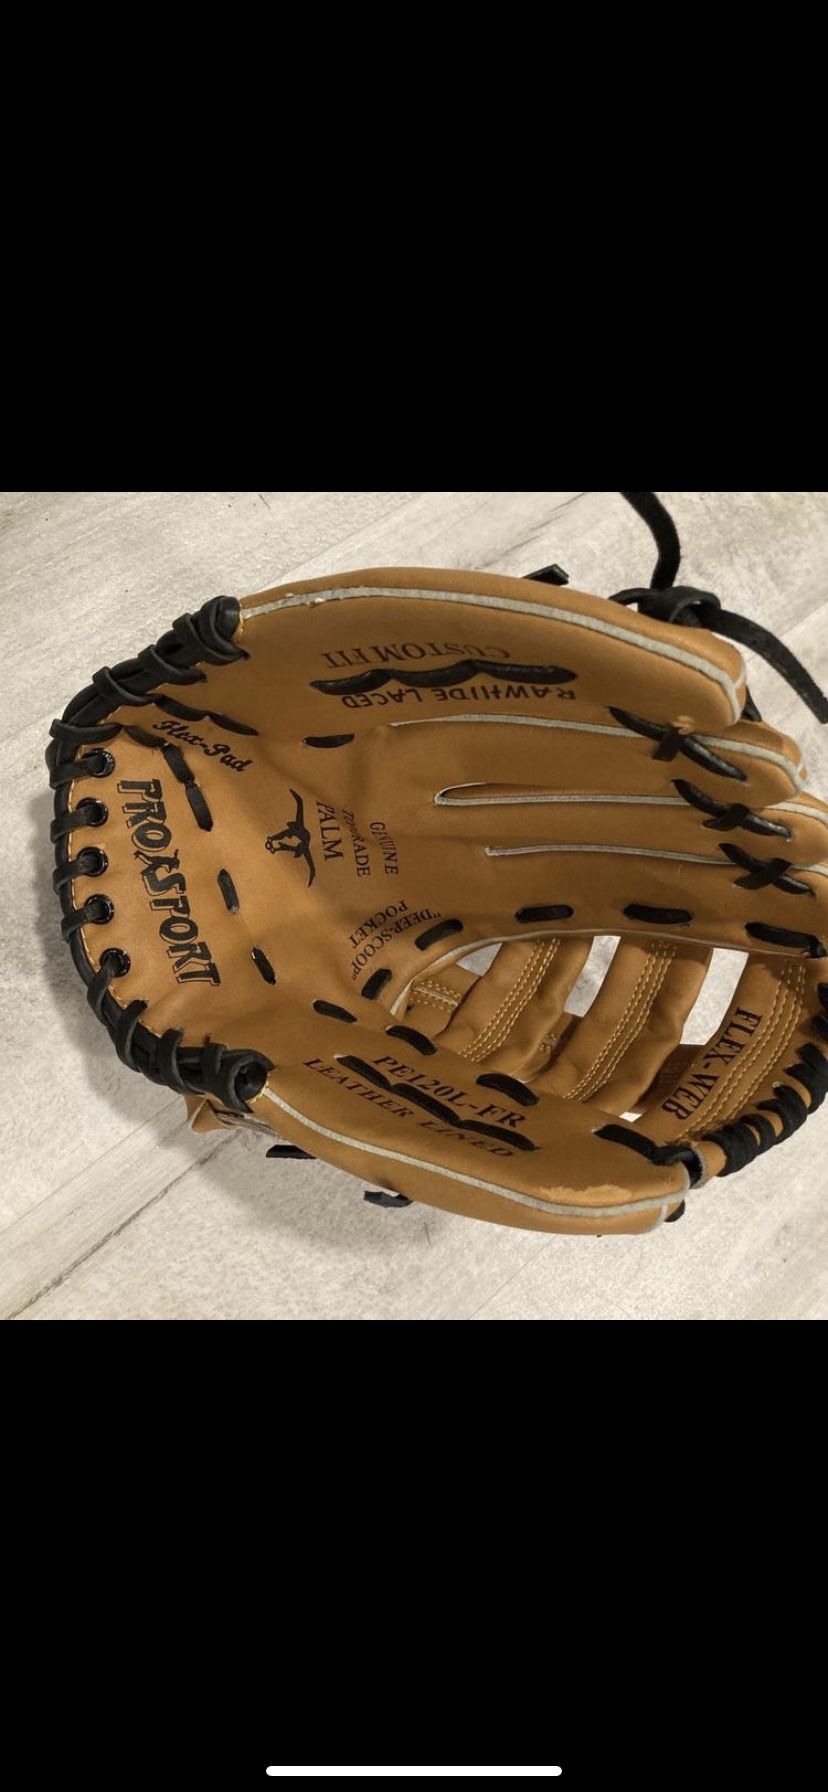 Pro sport baseball glove ! Shipping available